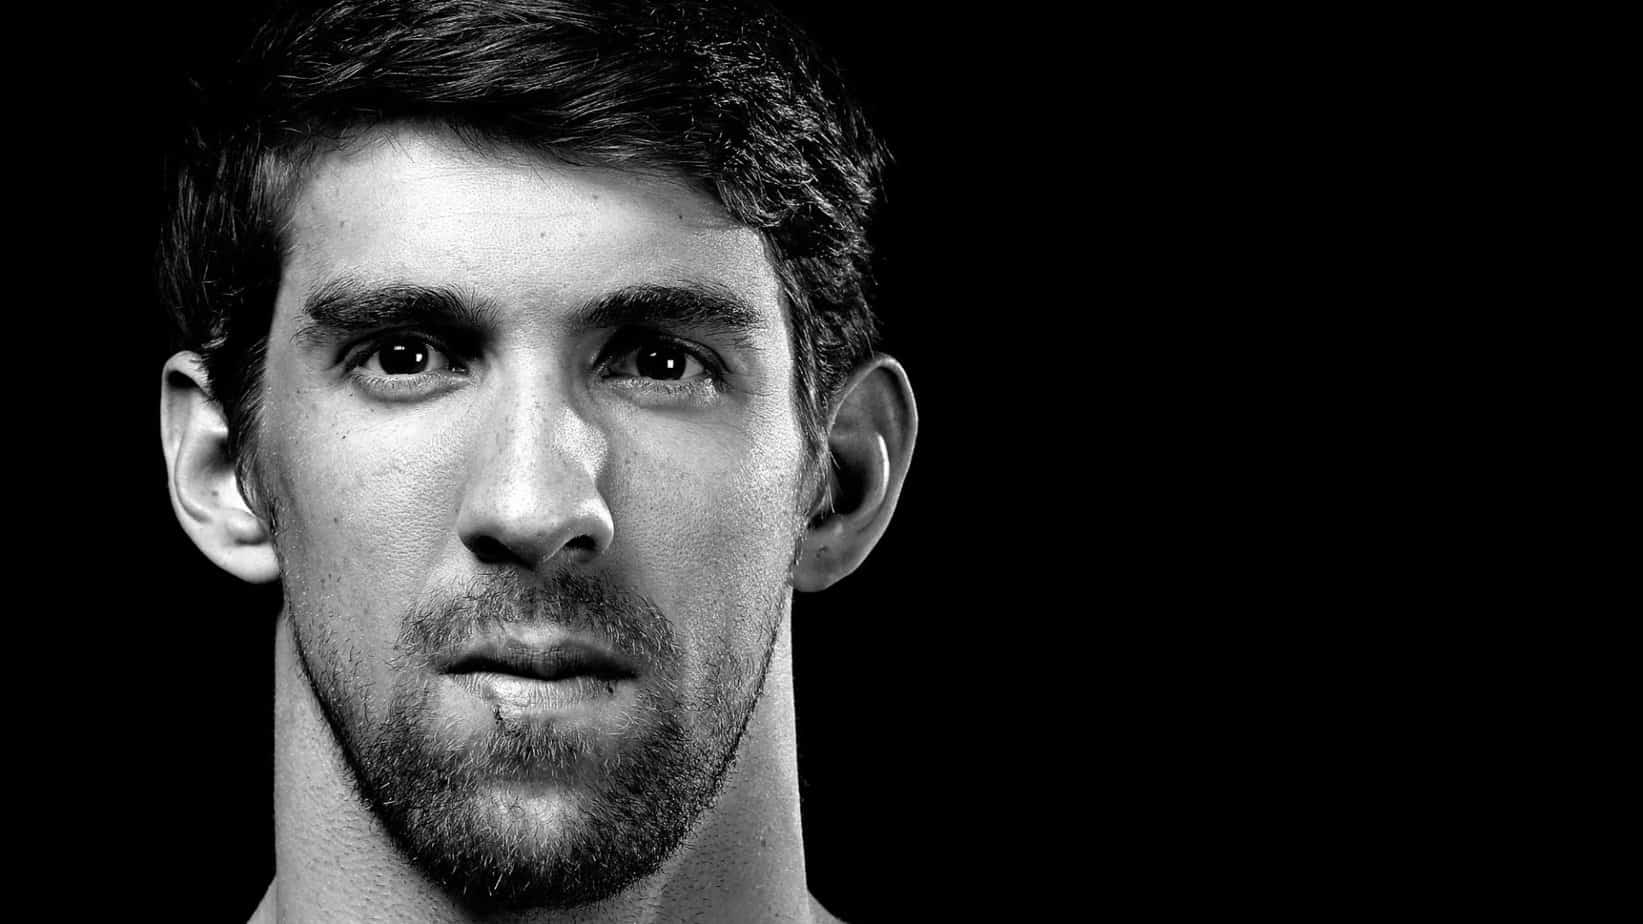 Michael Phelps striking a pose